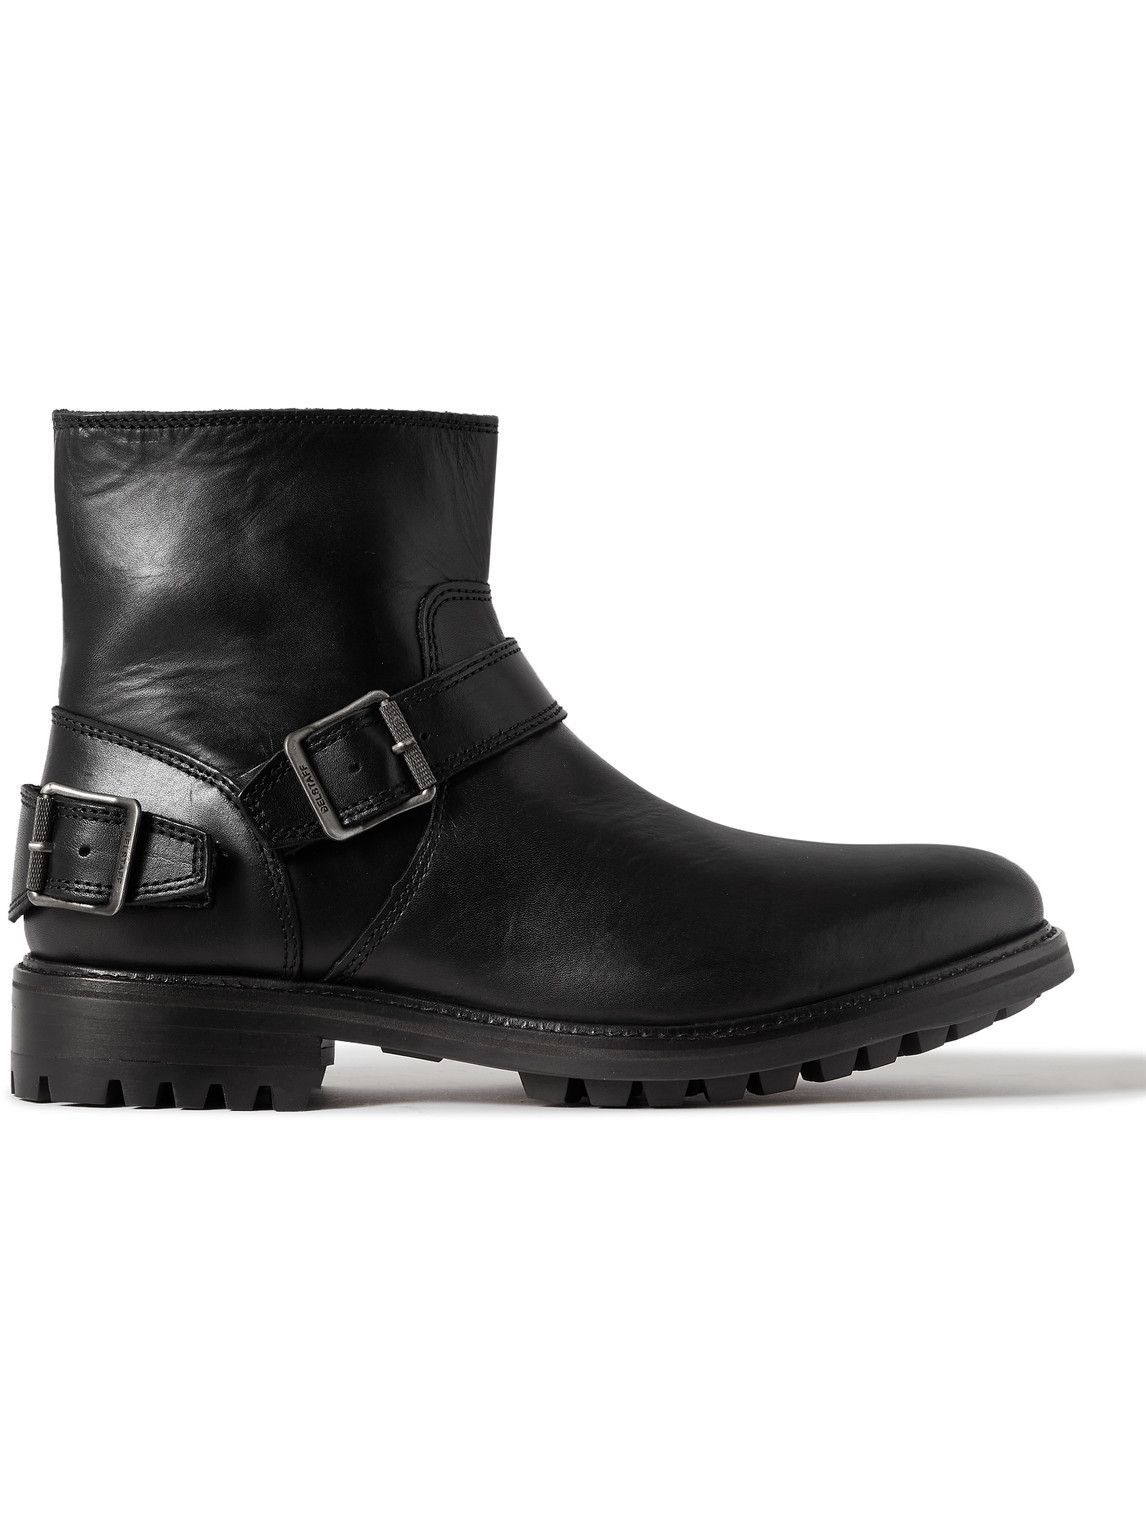 Photo: Belstaff - Trialmaster Leather Boots - Black